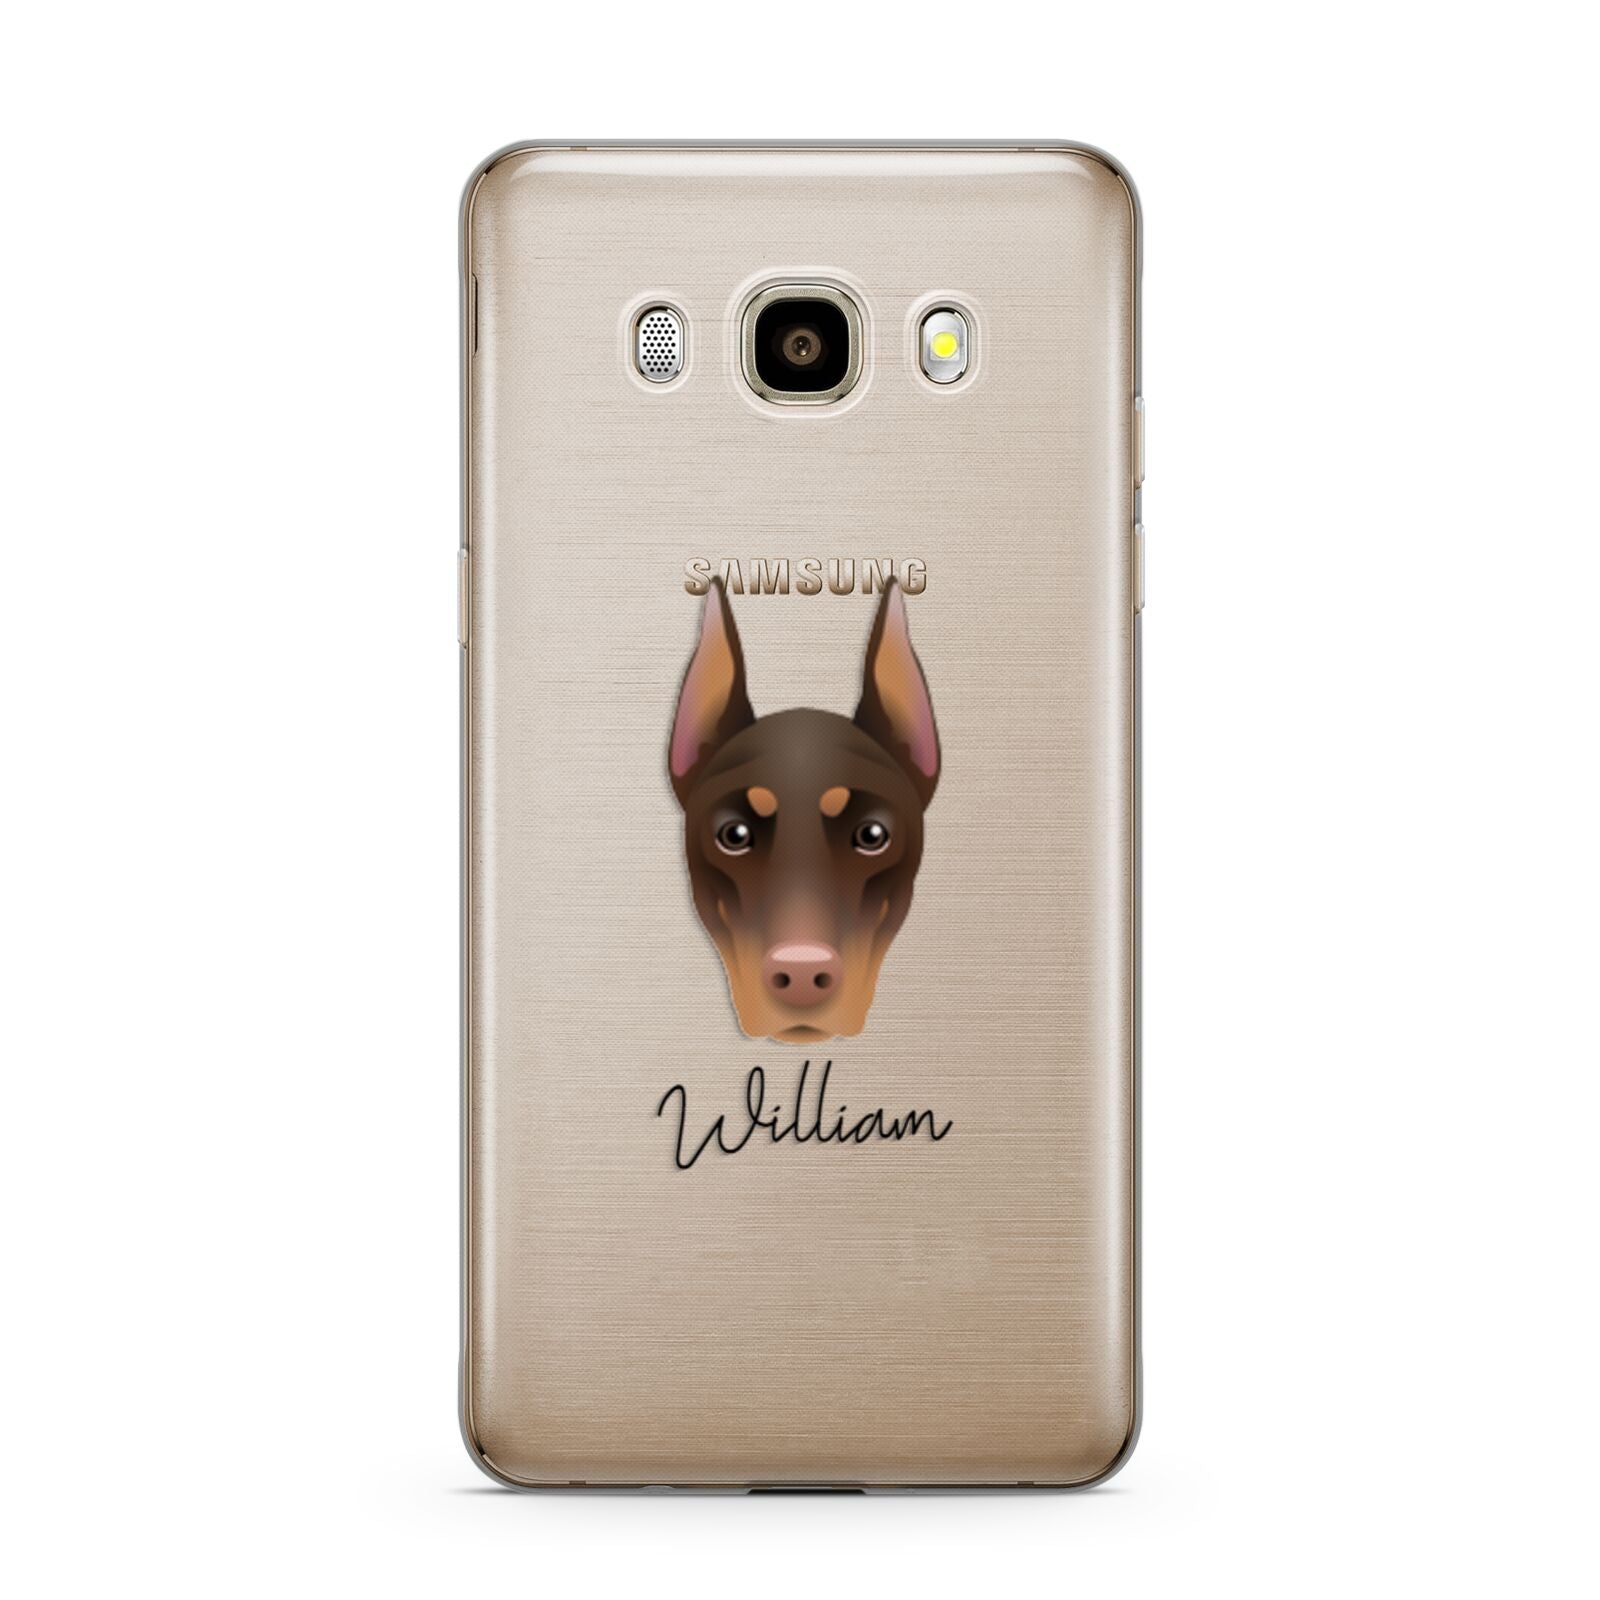 Dobermann Personalised Samsung Galaxy J7 2016 Case on gold phone